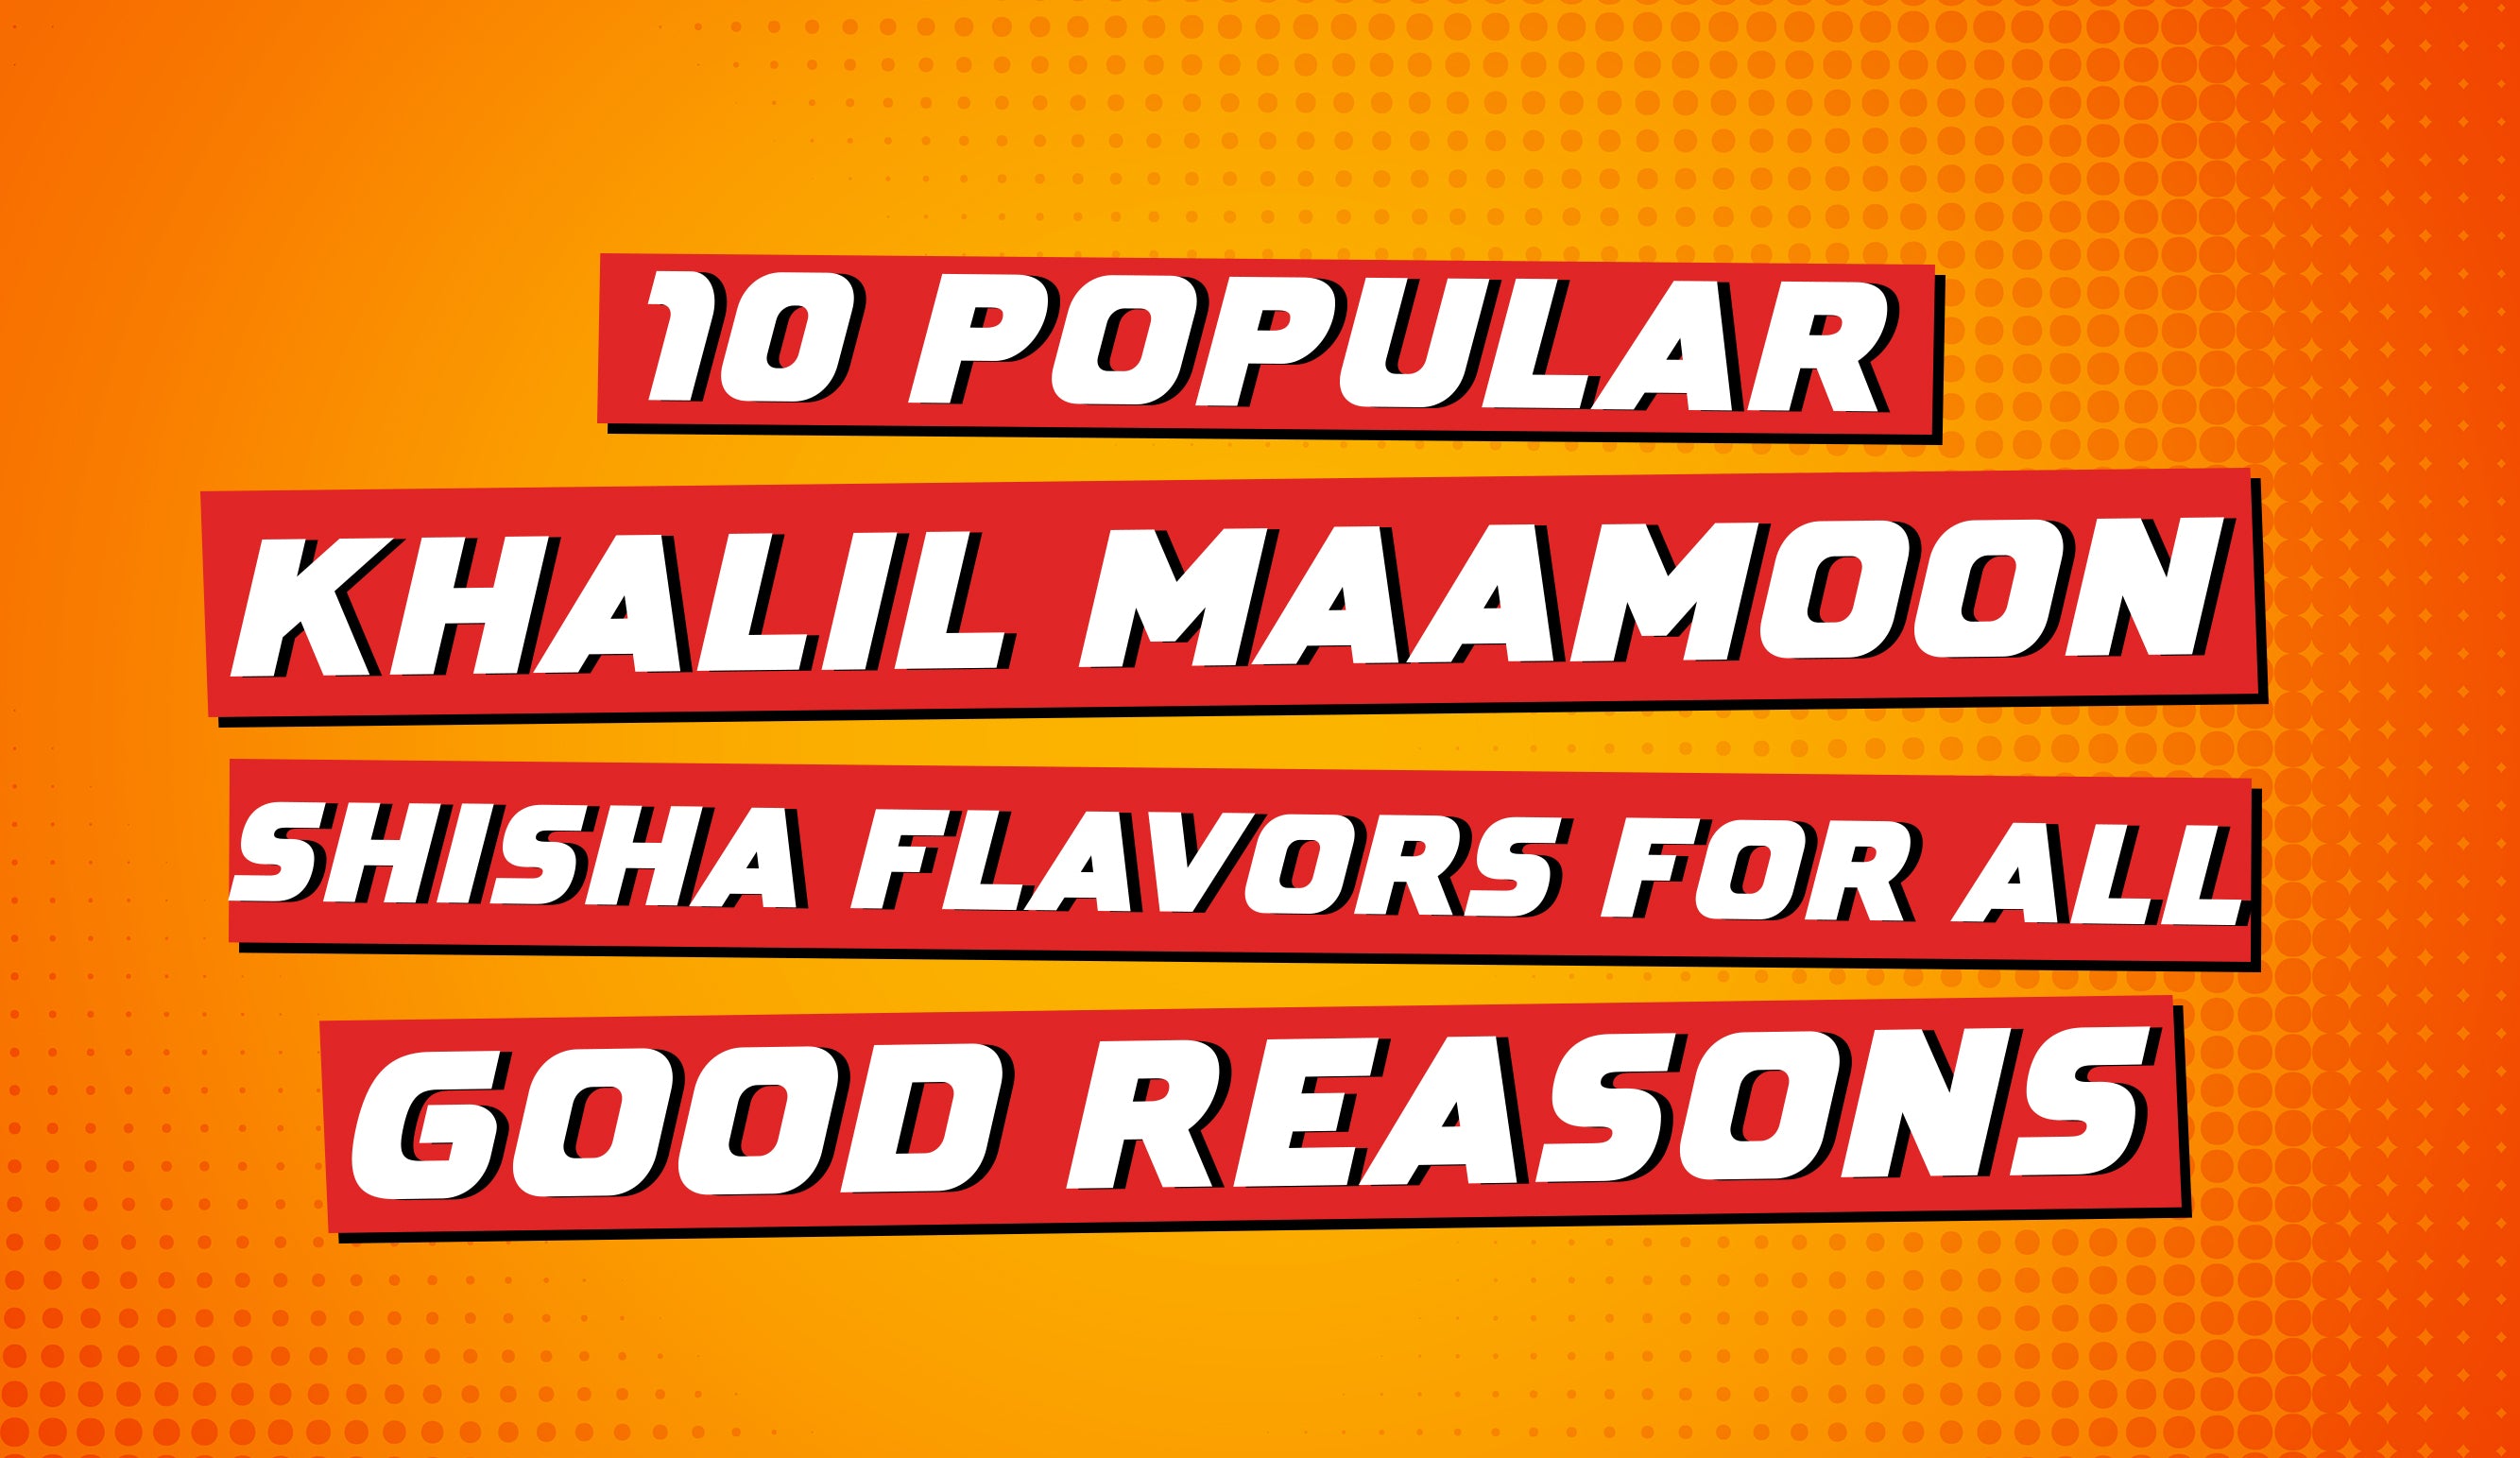 10 Popular Khalil Maamoon Shisha Flavors for All Good Reasons